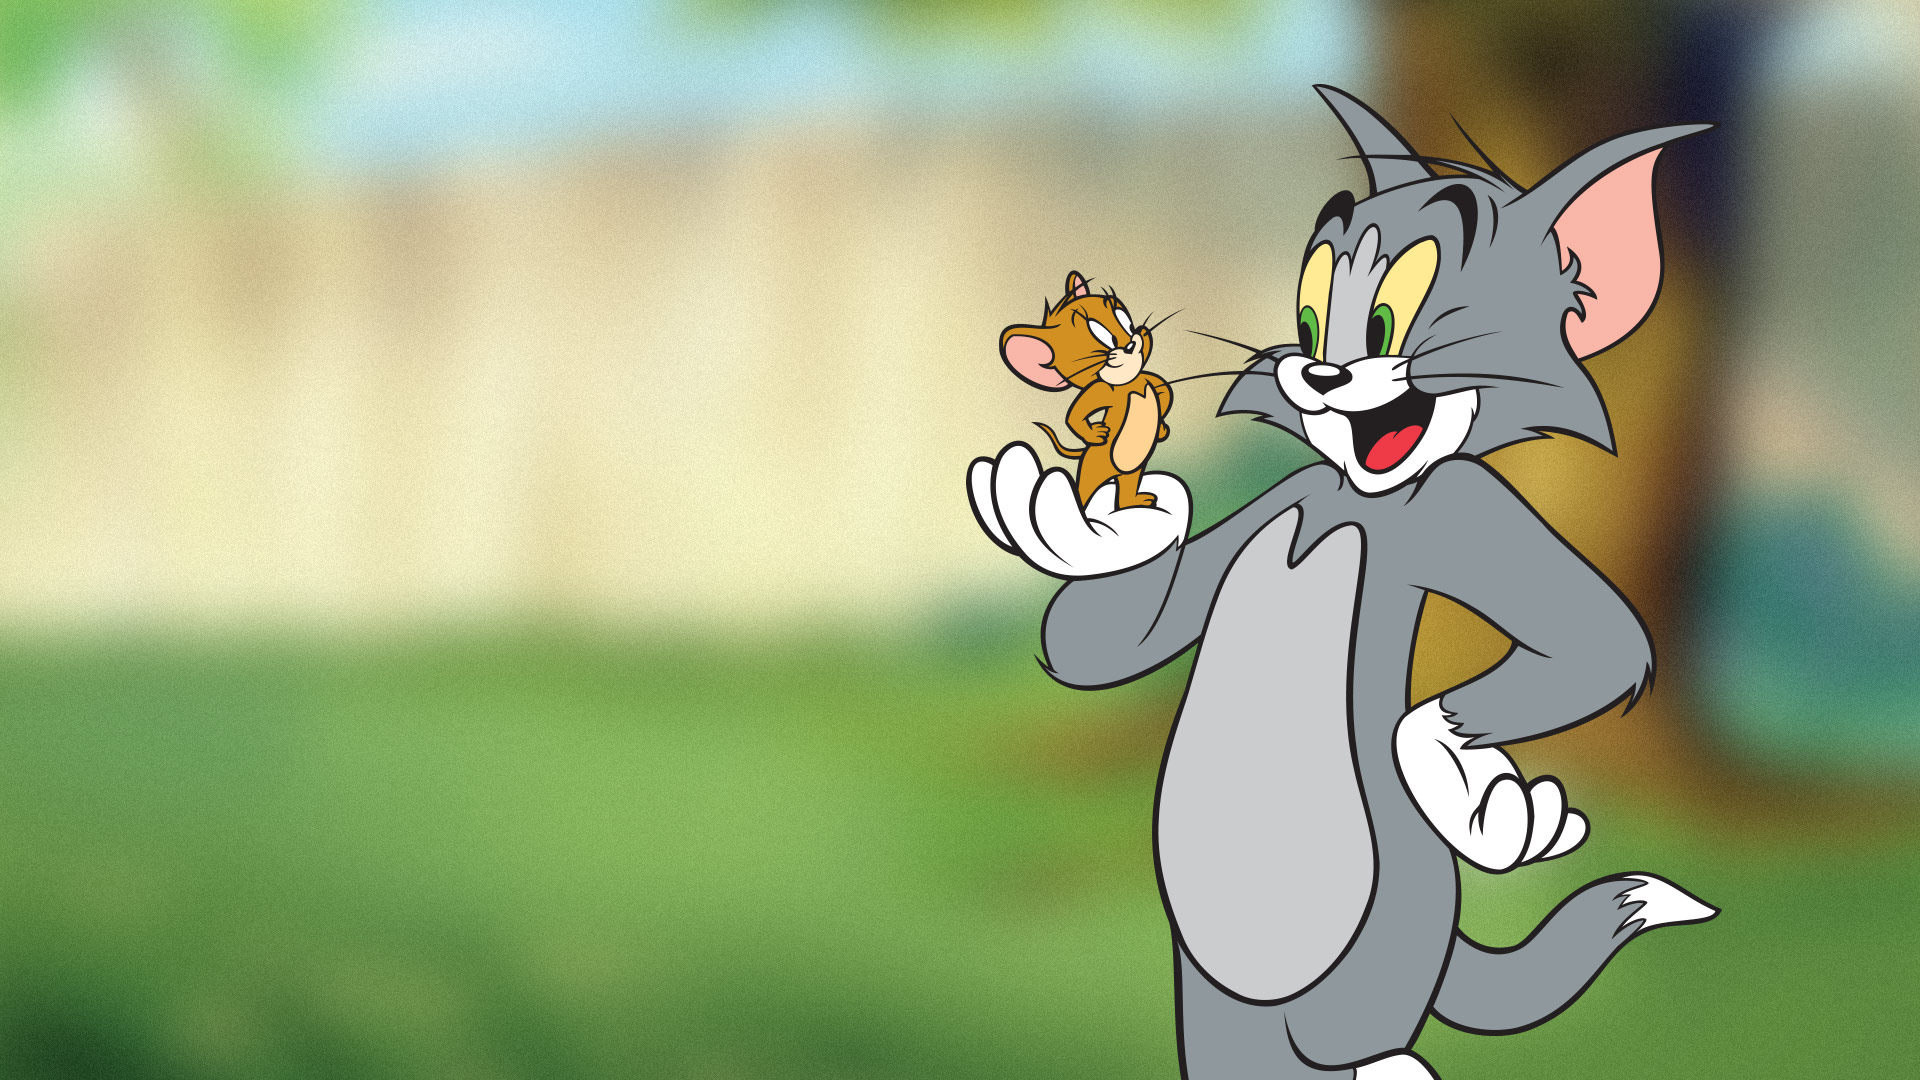 В каком году вышел том и джерри. Tom and Jerry. Том и Джерри Tom and Jerry. Том и Джерри (Tom and Jerry) 1940. Tom and Jerry 2012.